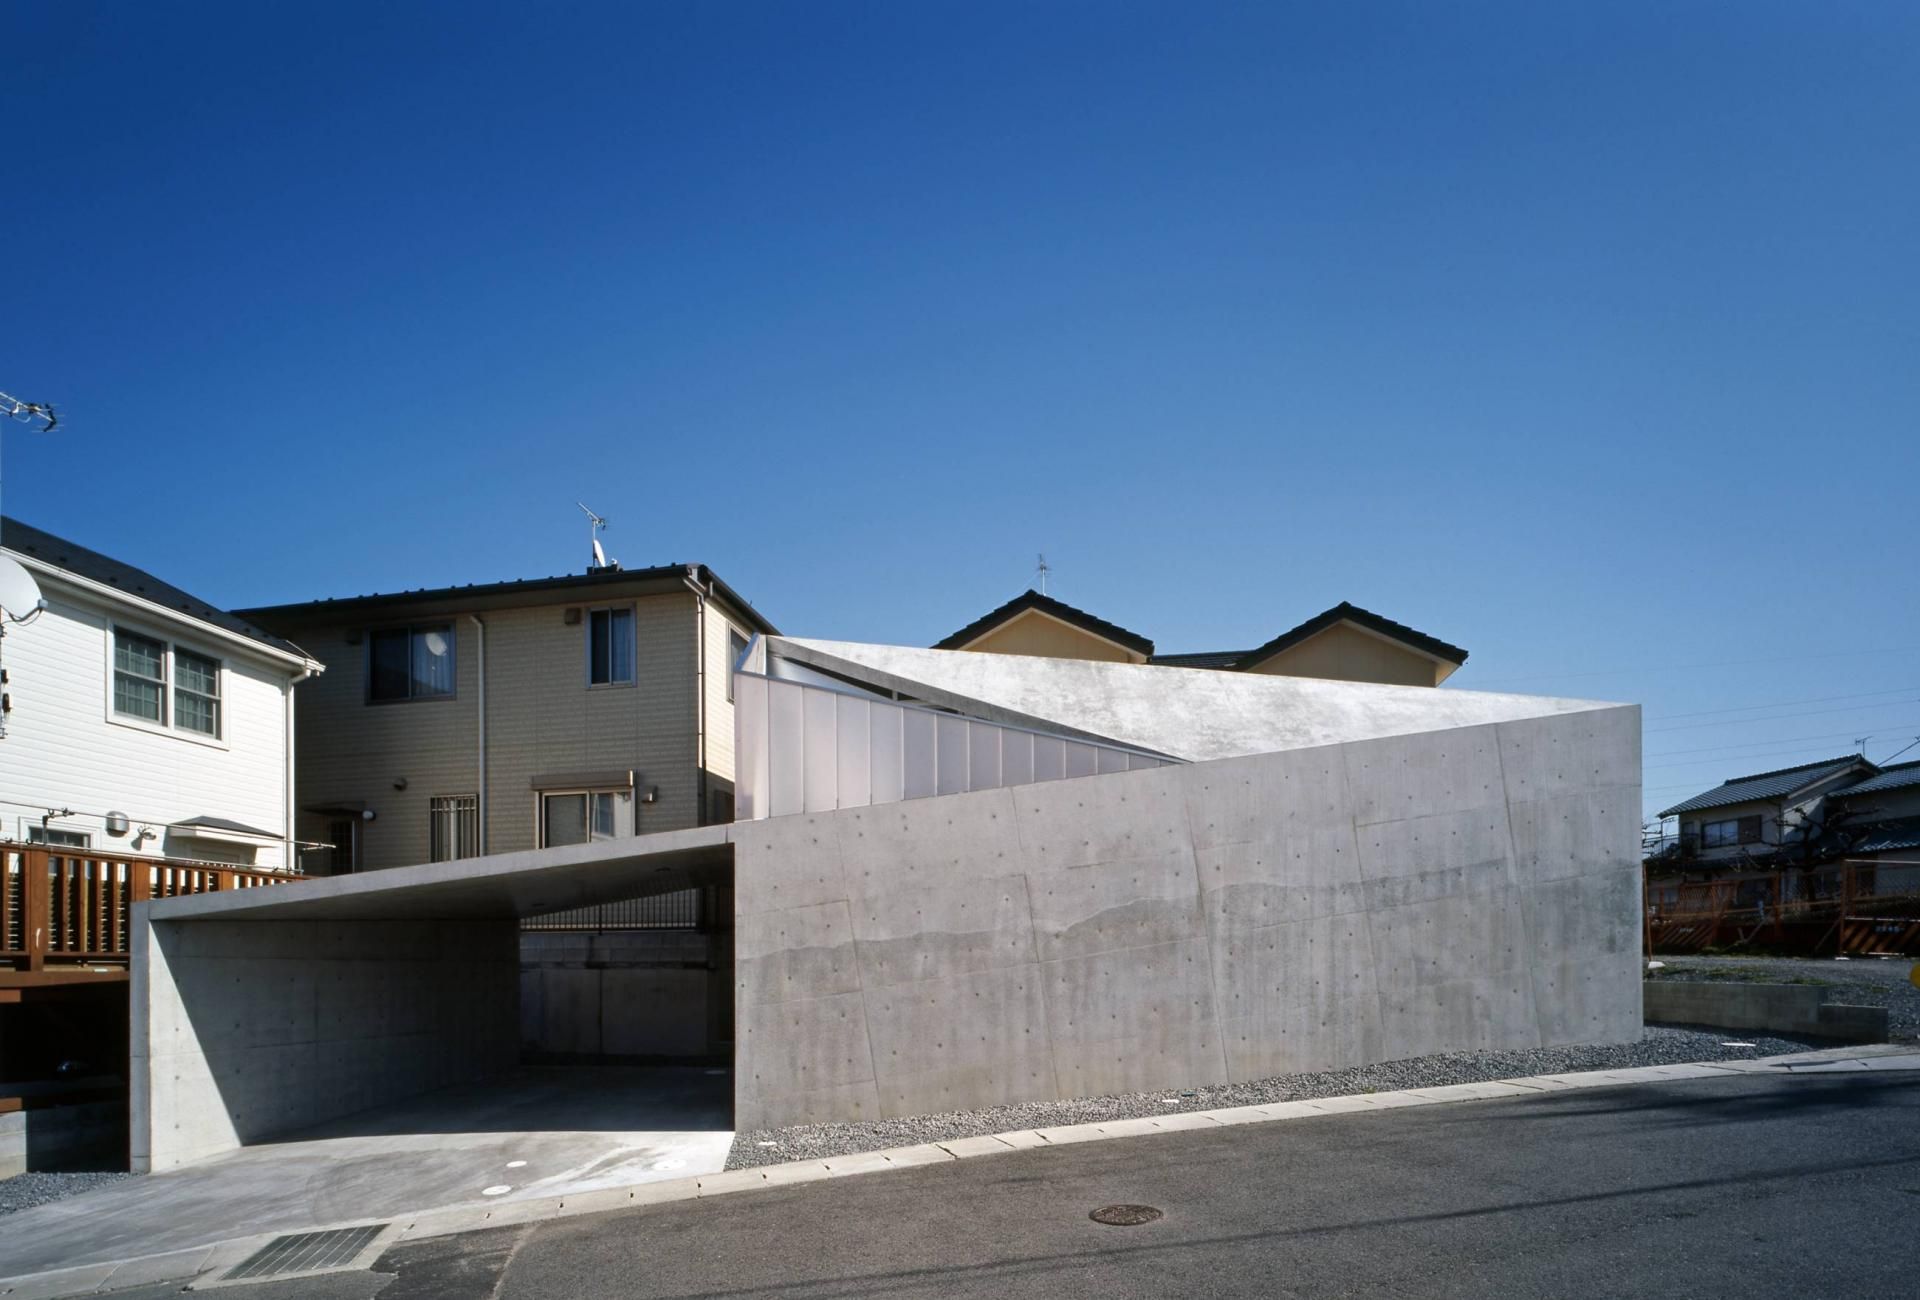 Modern Concrete House Built On A Budget And Featuring An Irregular Shape